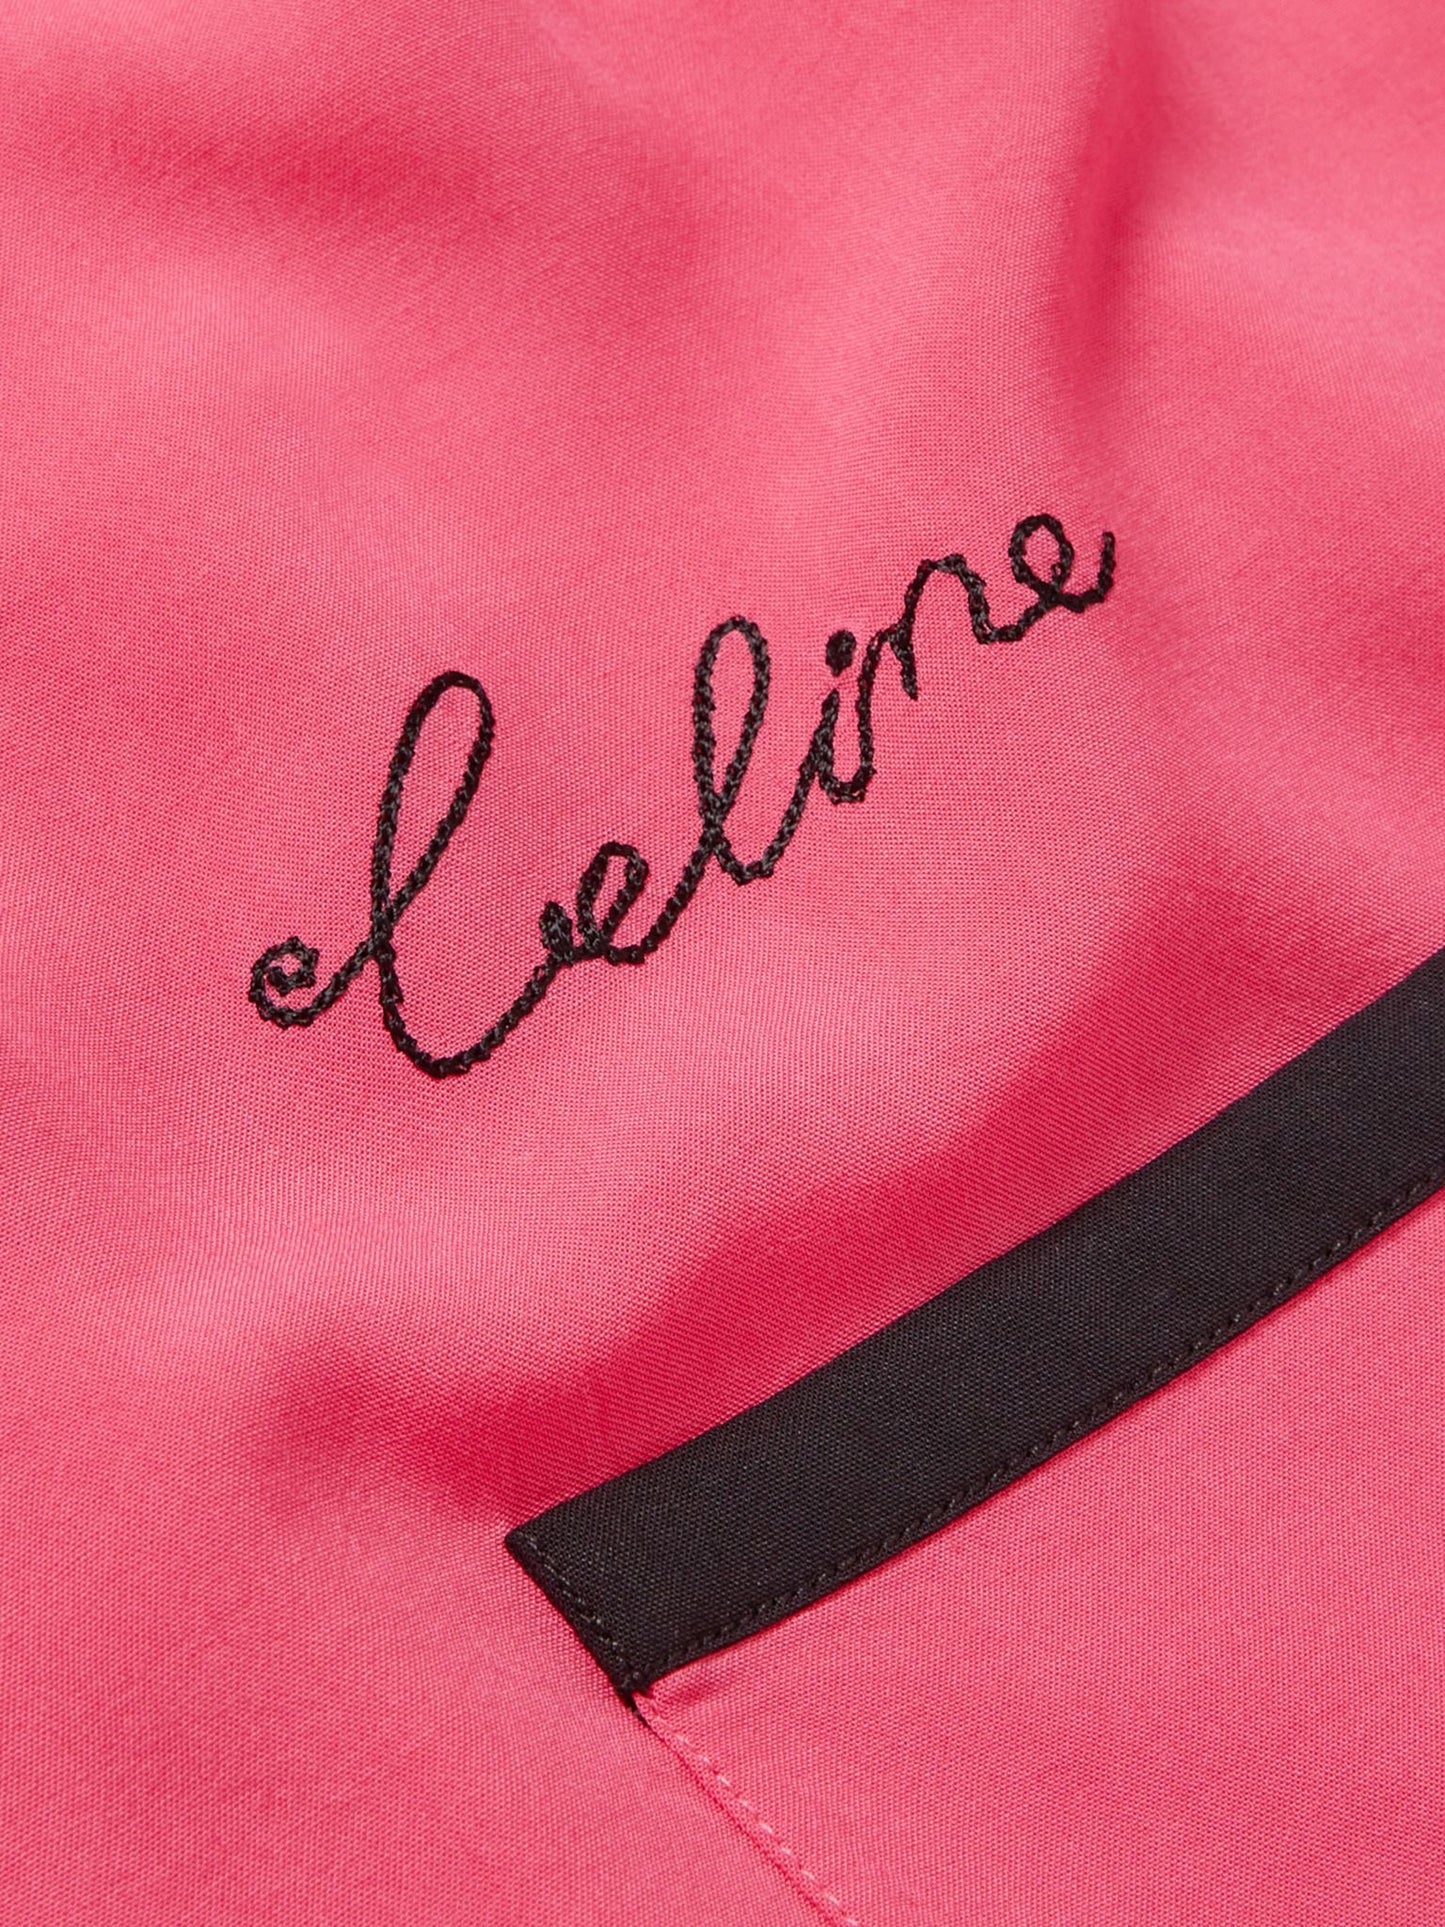 Celine Camp-Collar Logo-Embroidered Twill Shirt